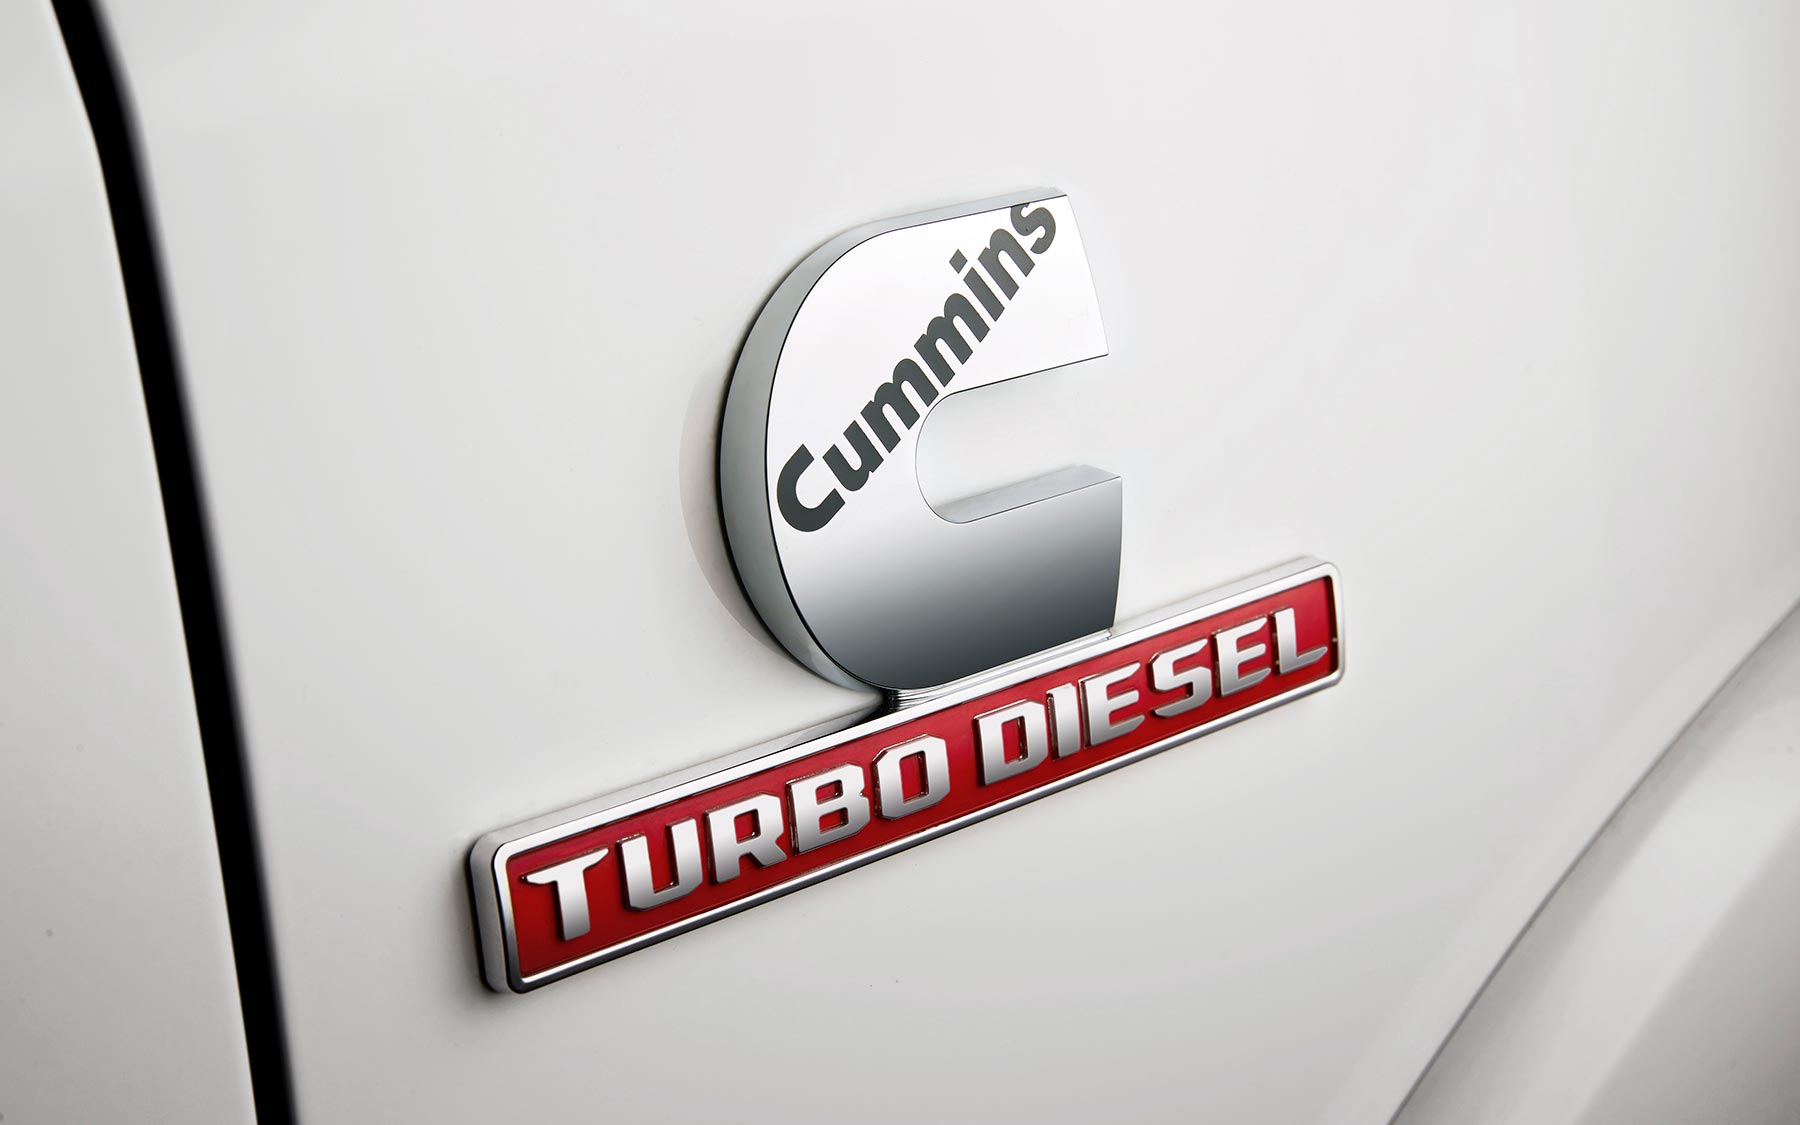 Class-exclusive Cummins Turbo Diesel